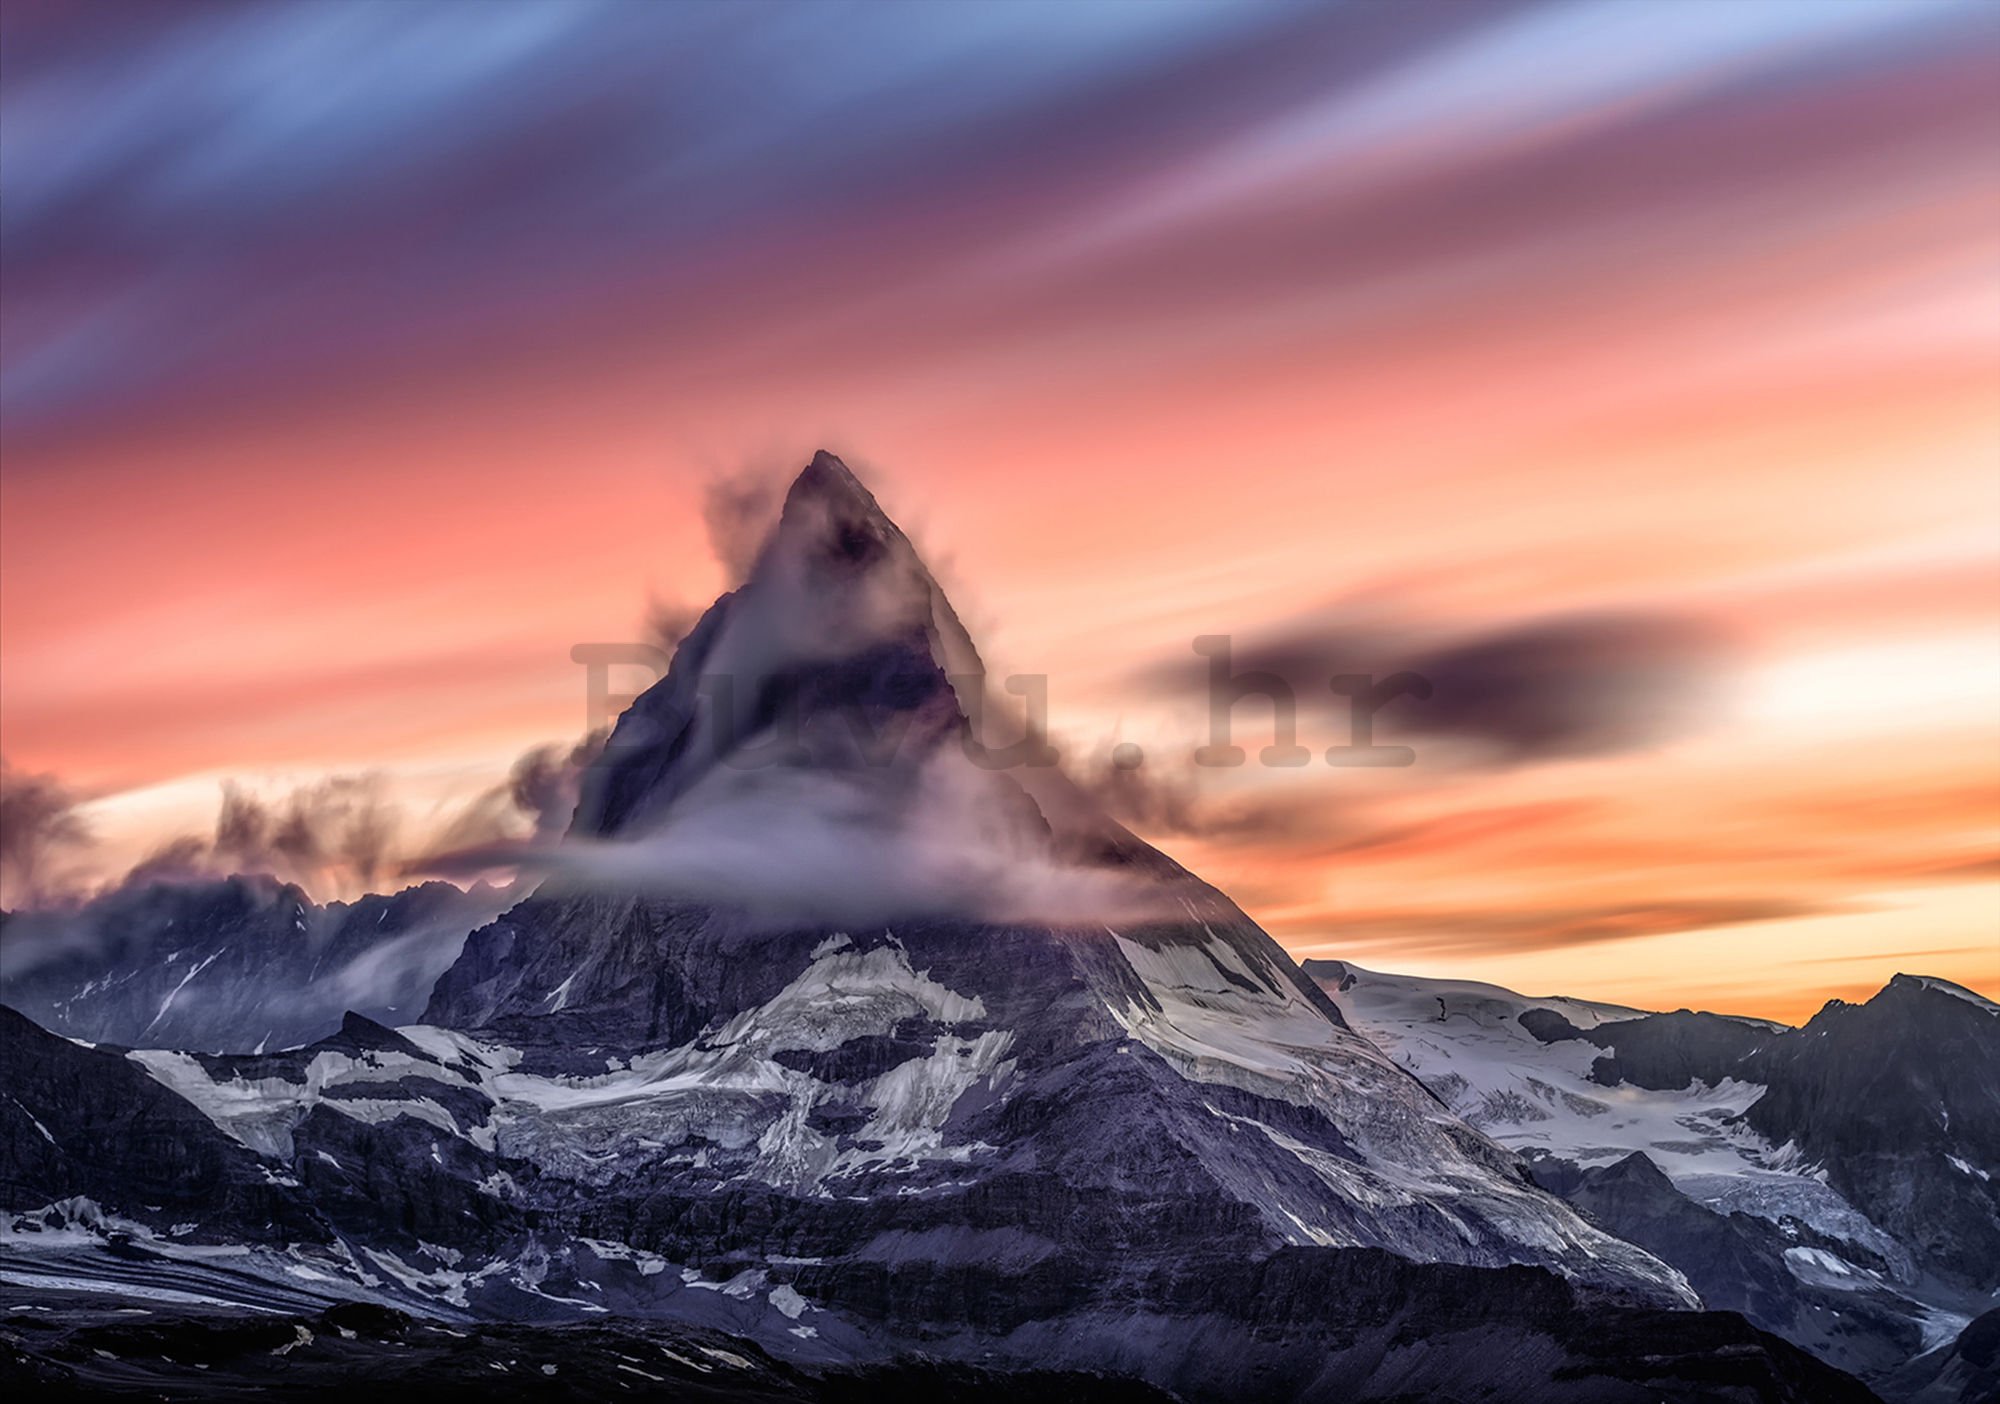 Foto tapeta: Matterhorn (1) - 184x254 cm